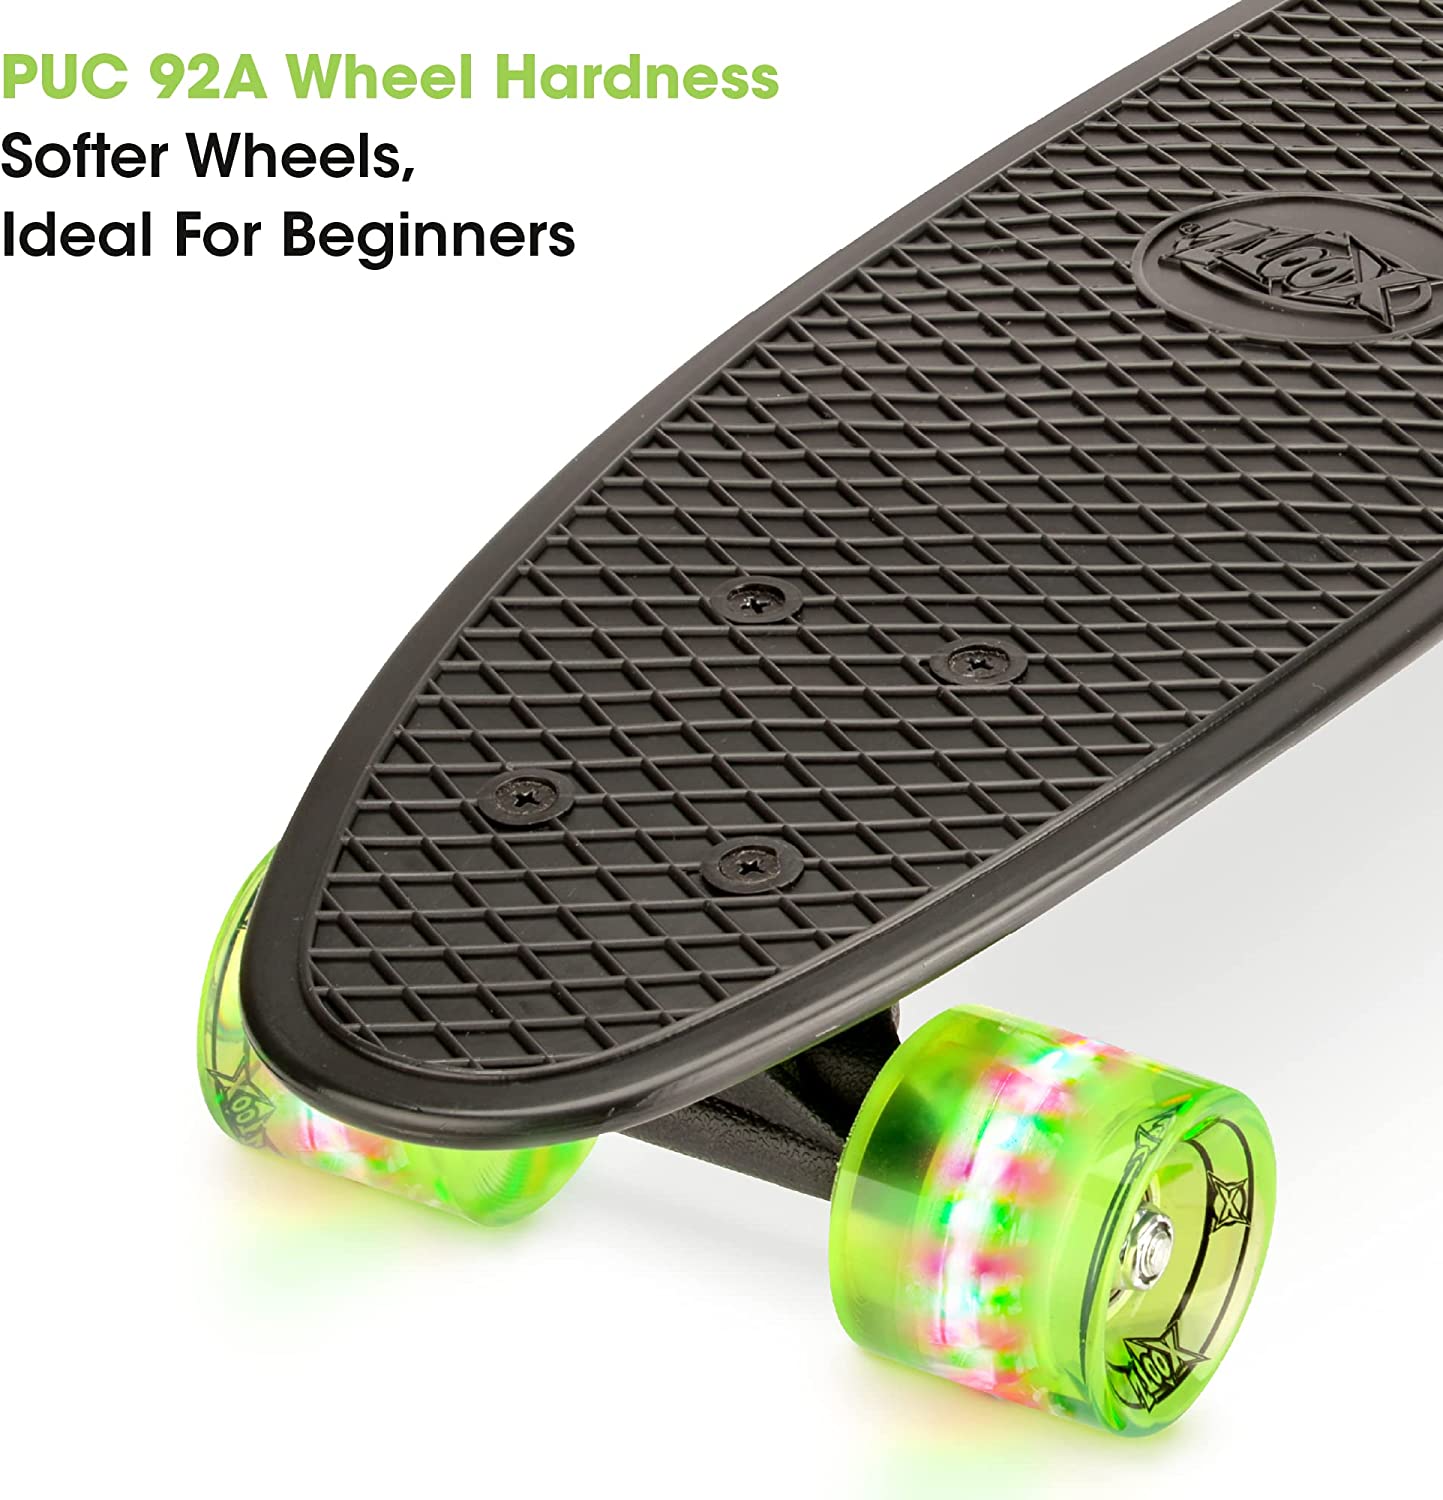 Xootz Kid's Complete Retro Plastic Skateboard with LED Light Up Wheels